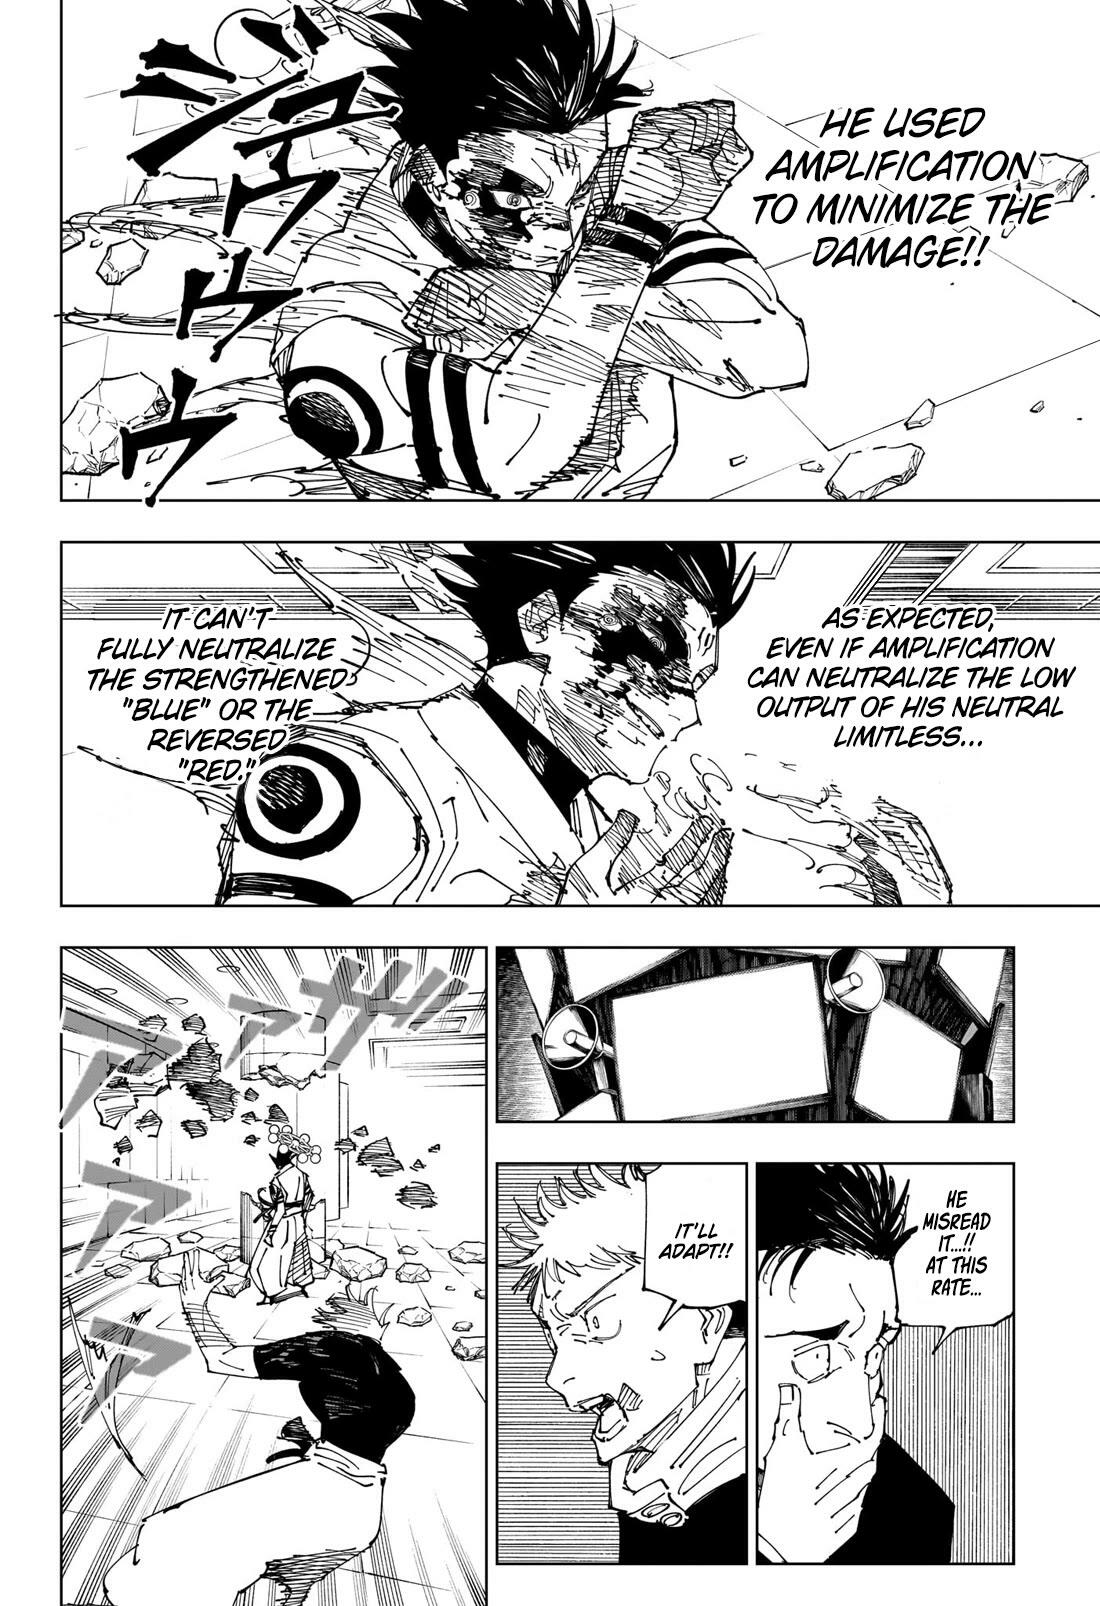 Jujutsu Kaisen Chapter 232: The Decisive Battle In The Uninhabited, Demon-Infested Shinjuku ⑩ page 11 - Mangakakalot